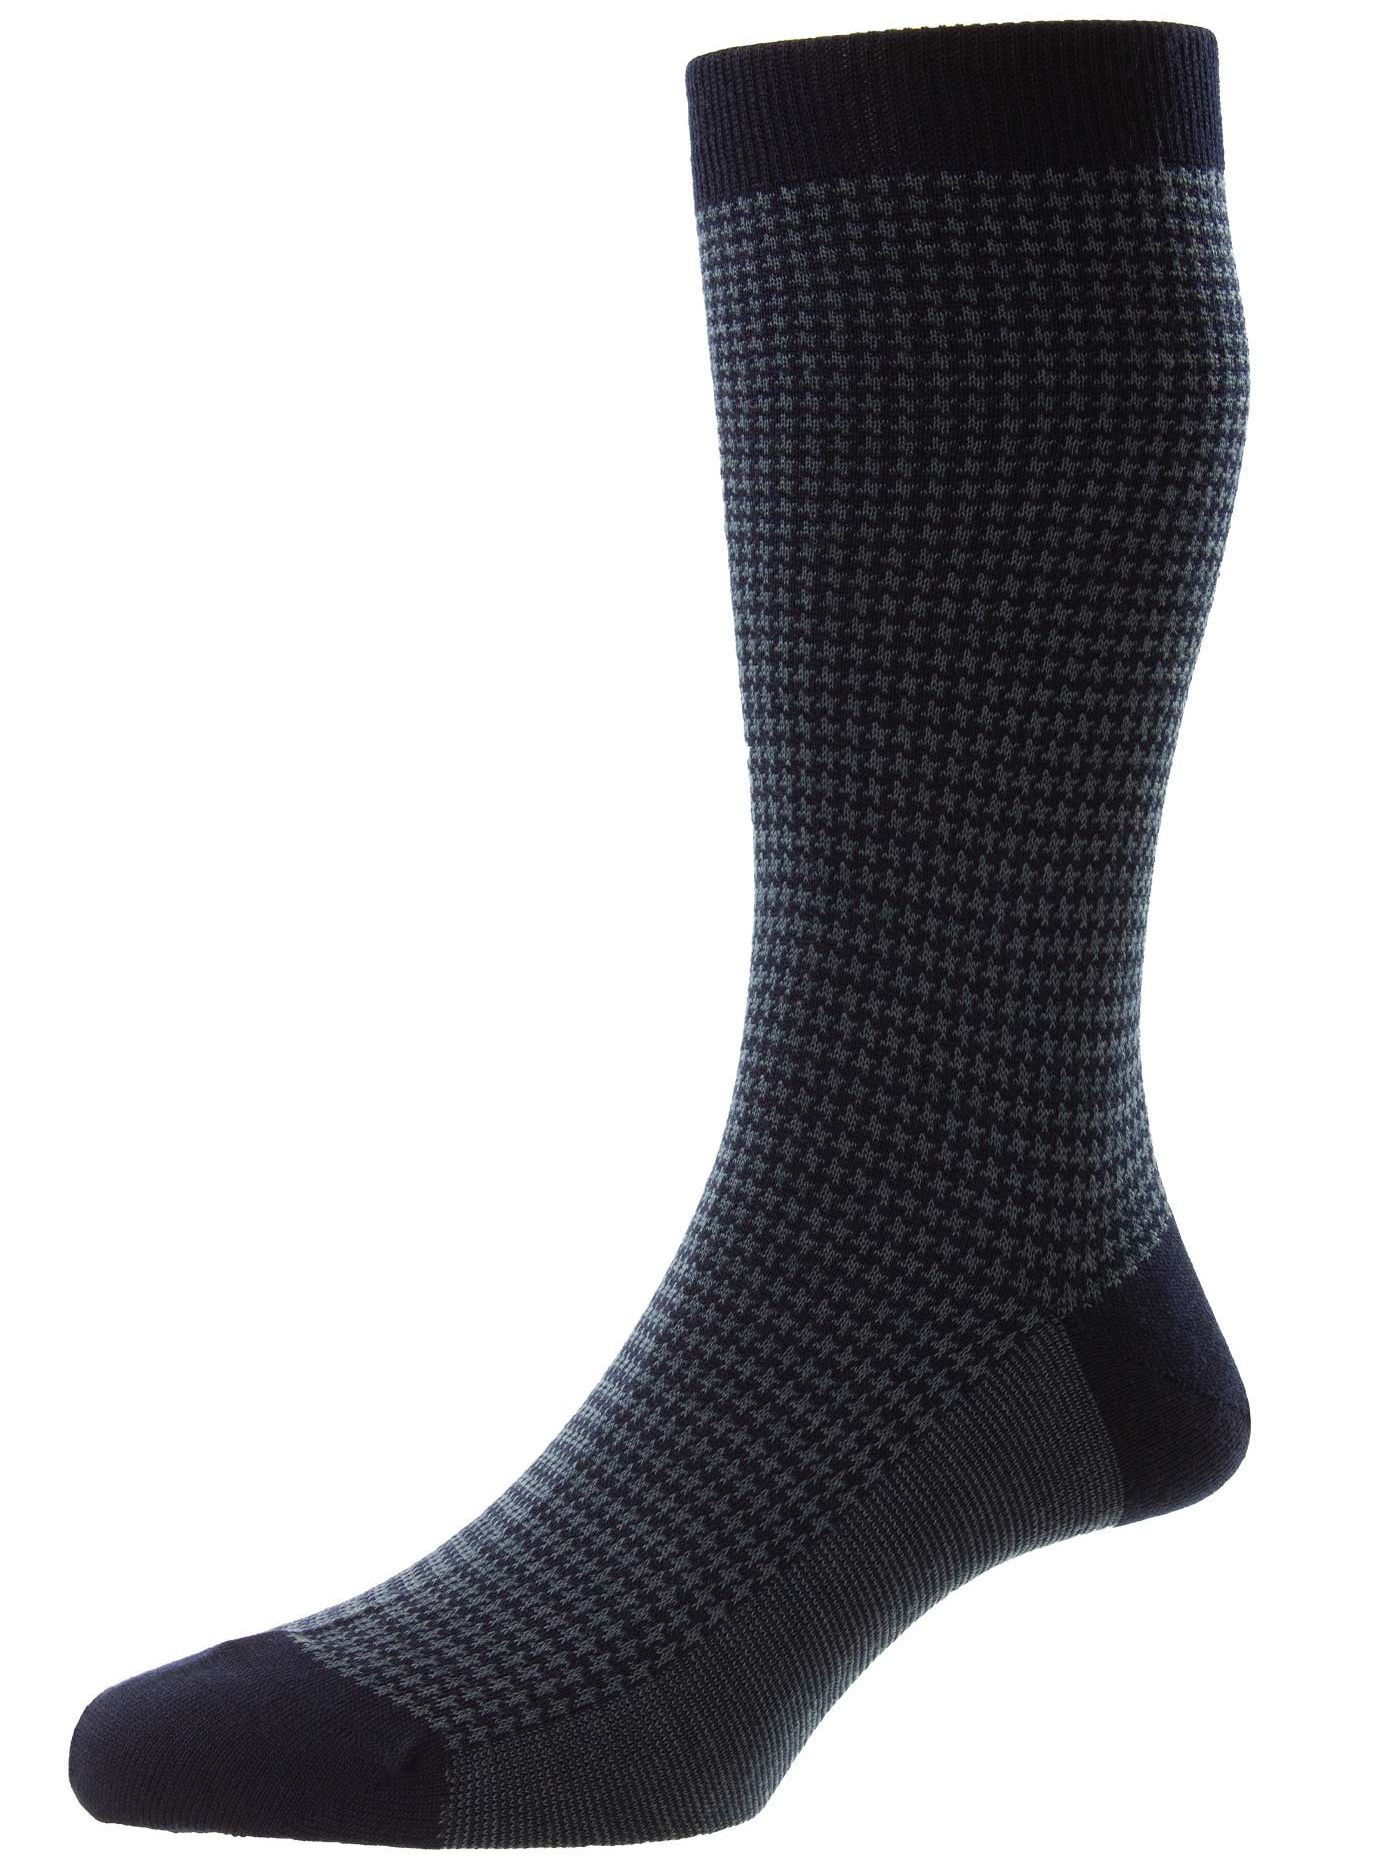 Pantherella Highbury Wool Houndstooth Mid-Calf Socks - Navy